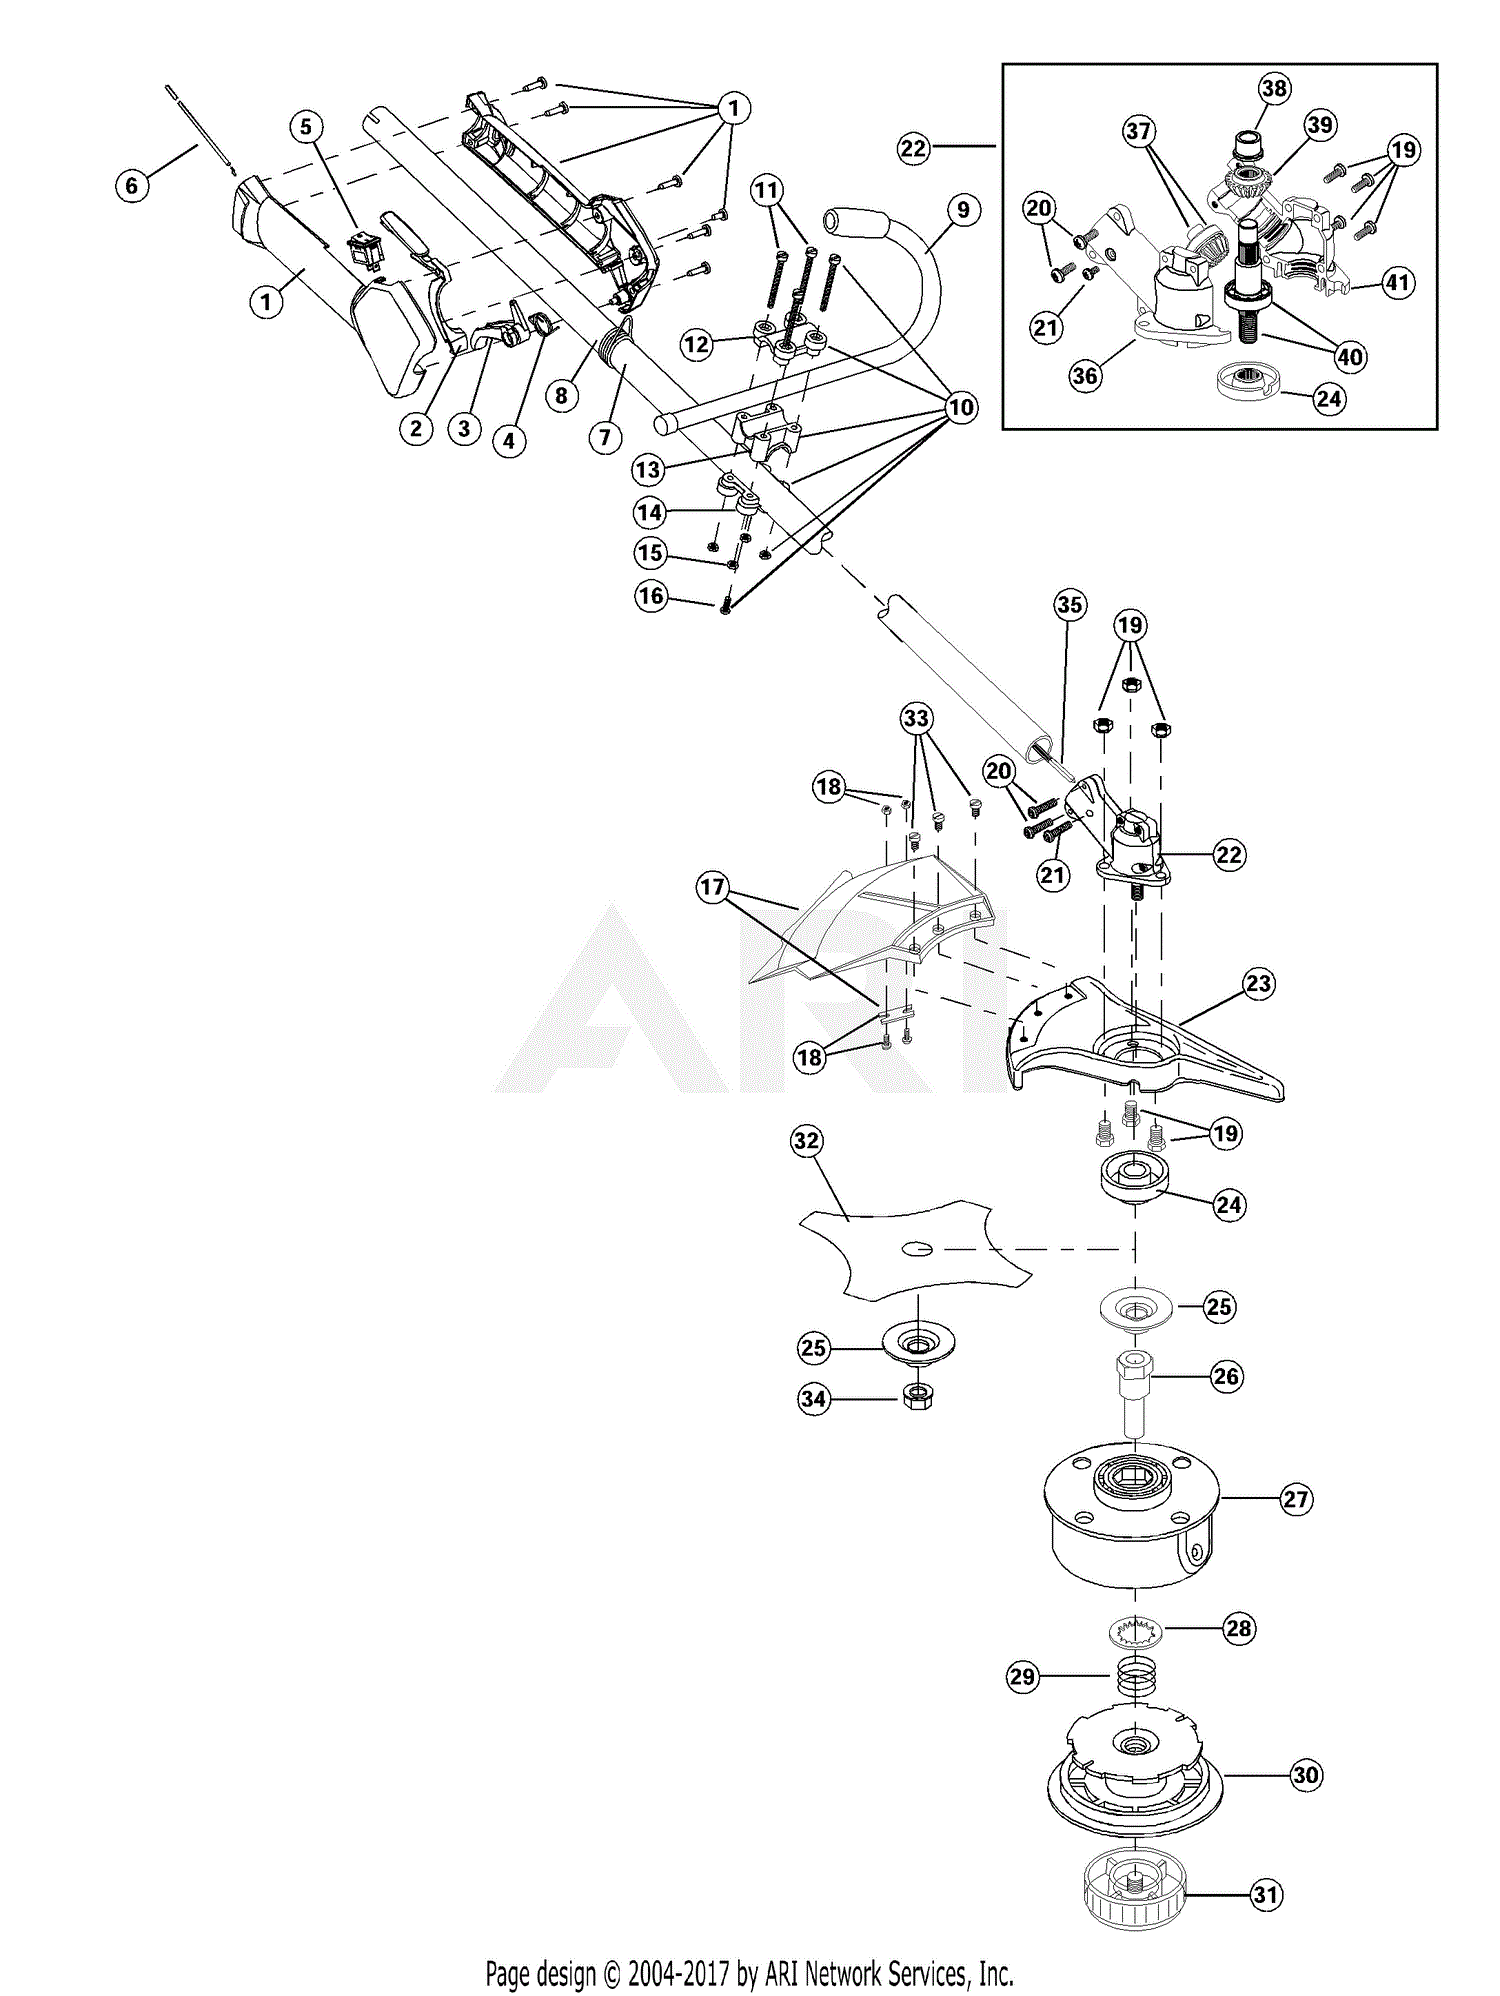 bolens riding mower wiring diagram